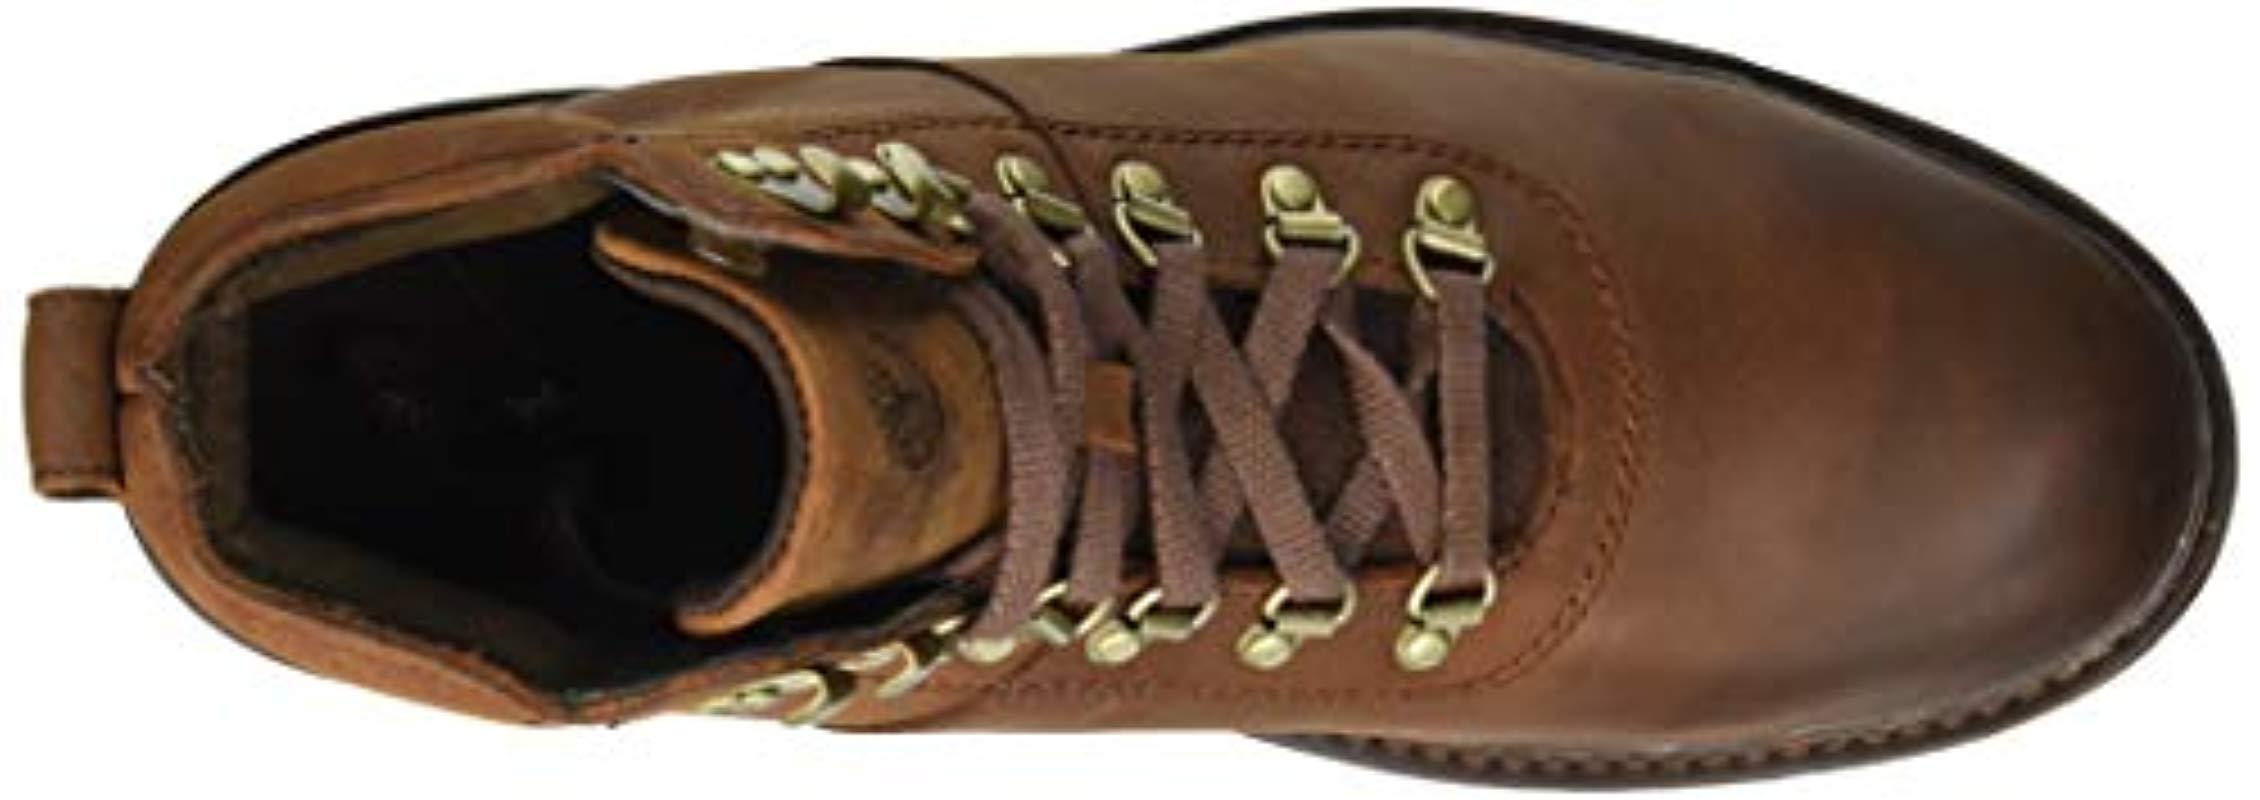 timberland men's logan bay alpine hiker ankle boot